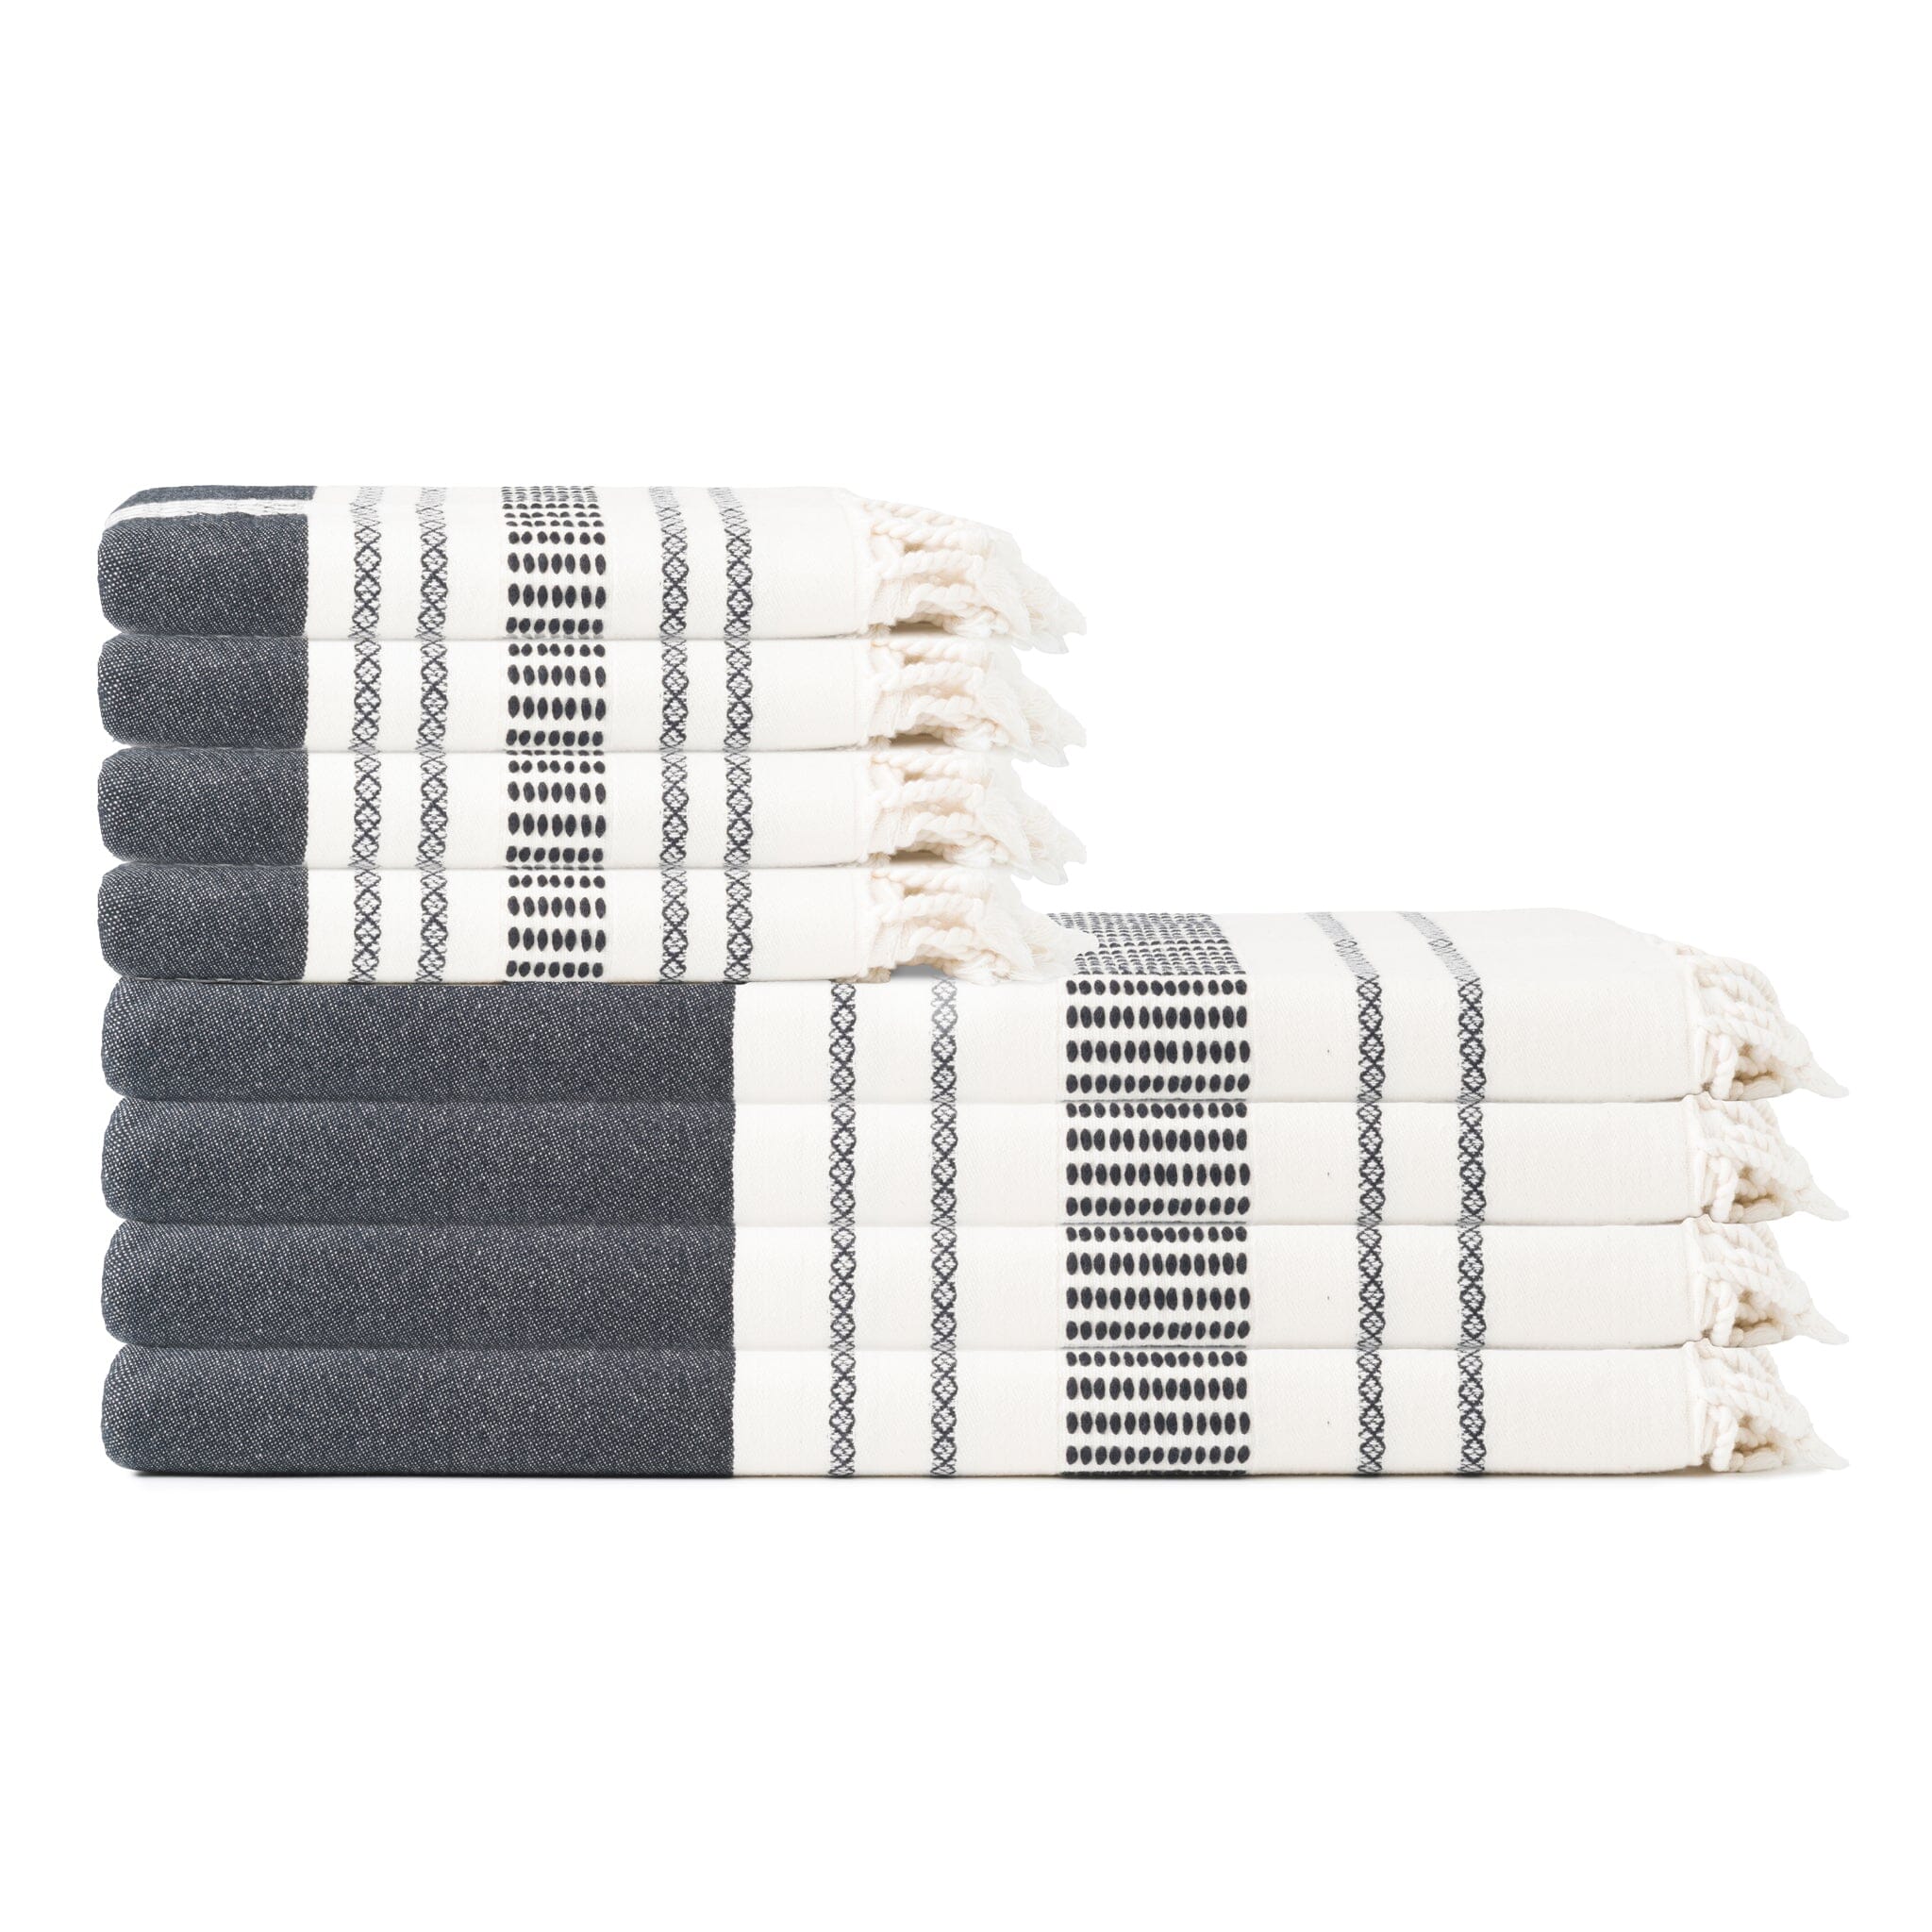 Hand-loomed Turkish Cotton Towel - Stripes –